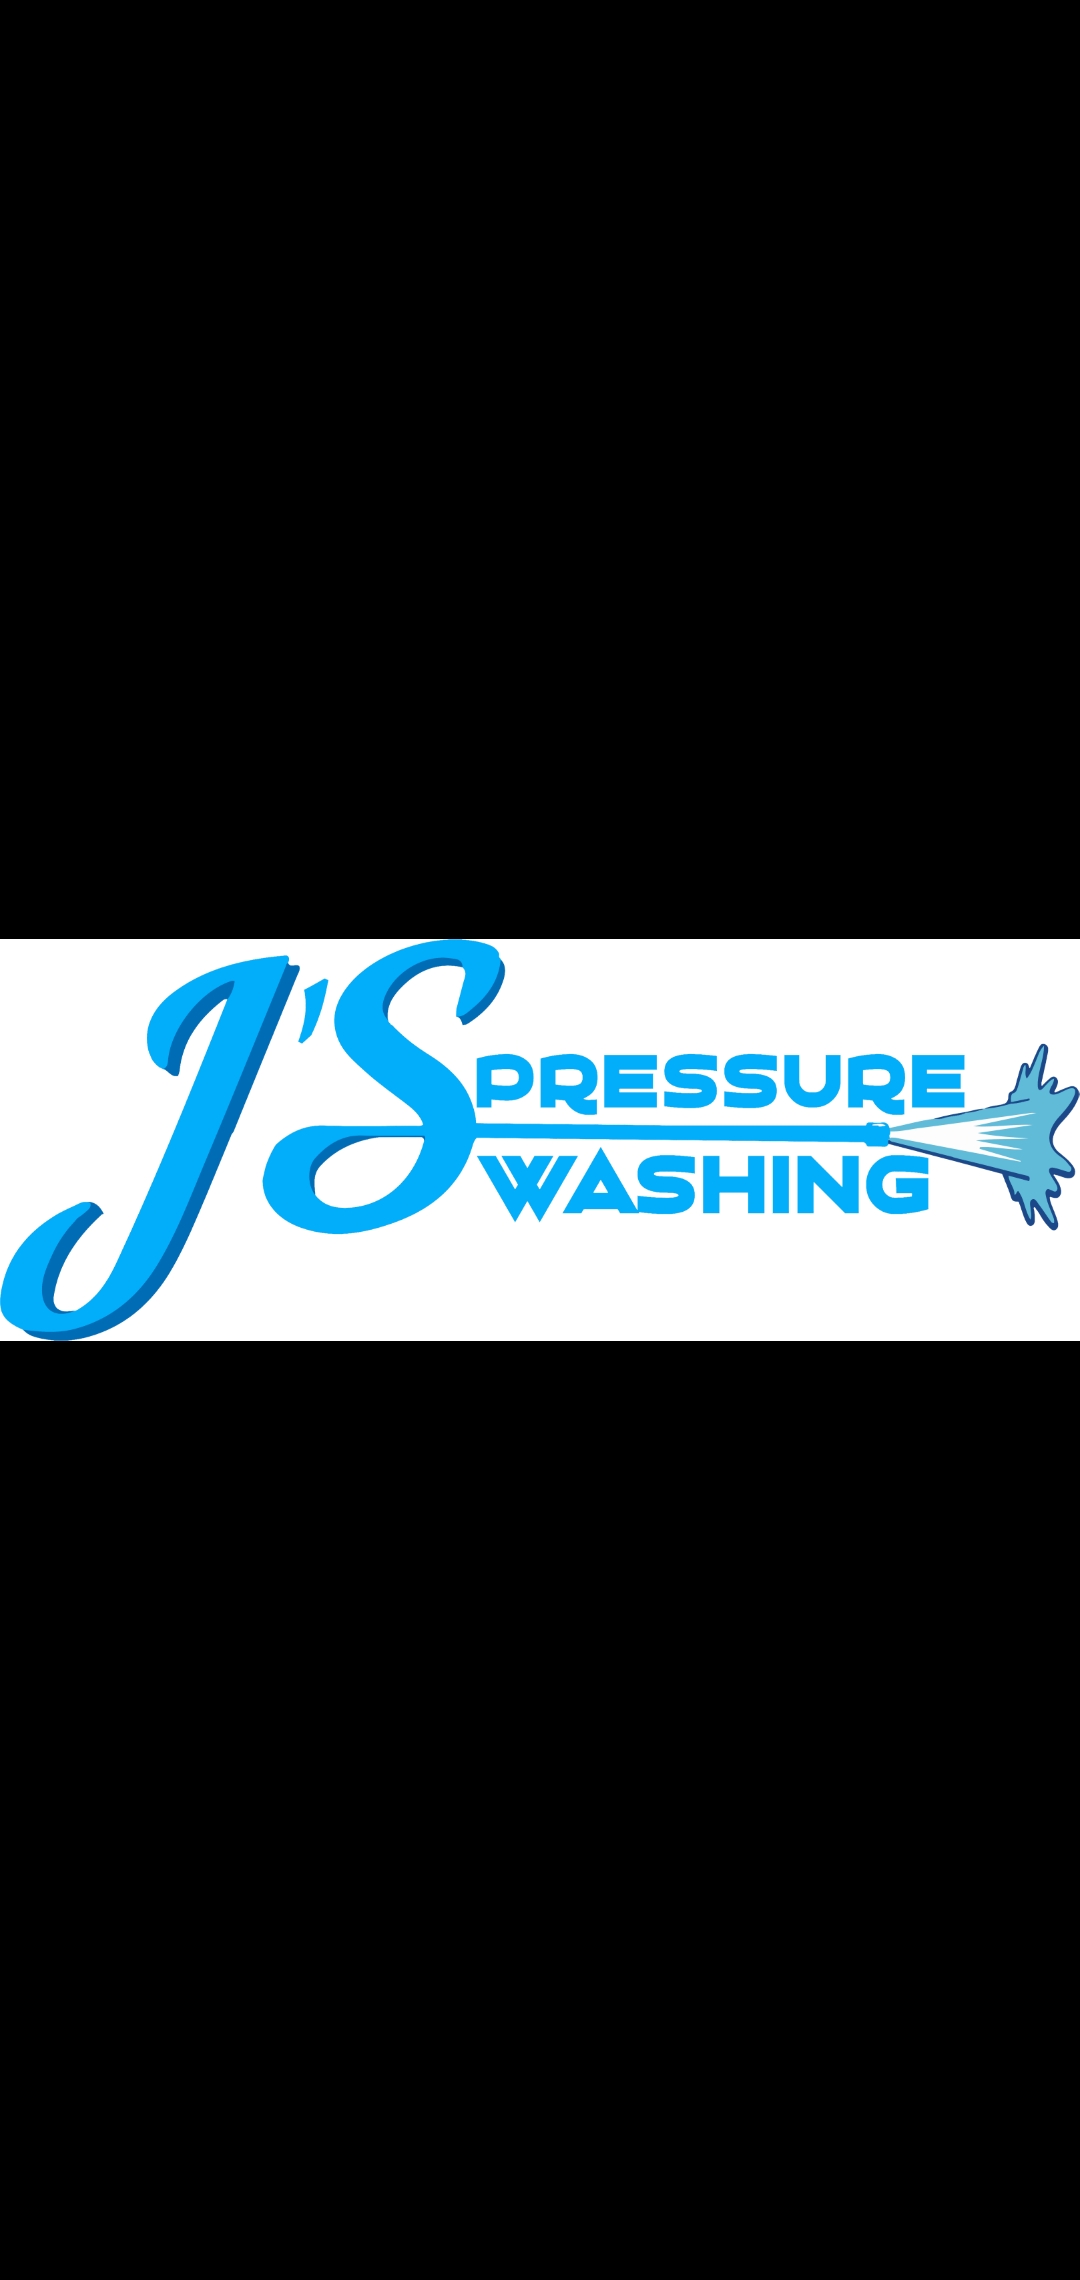 J's Pressure Washing Service Logo